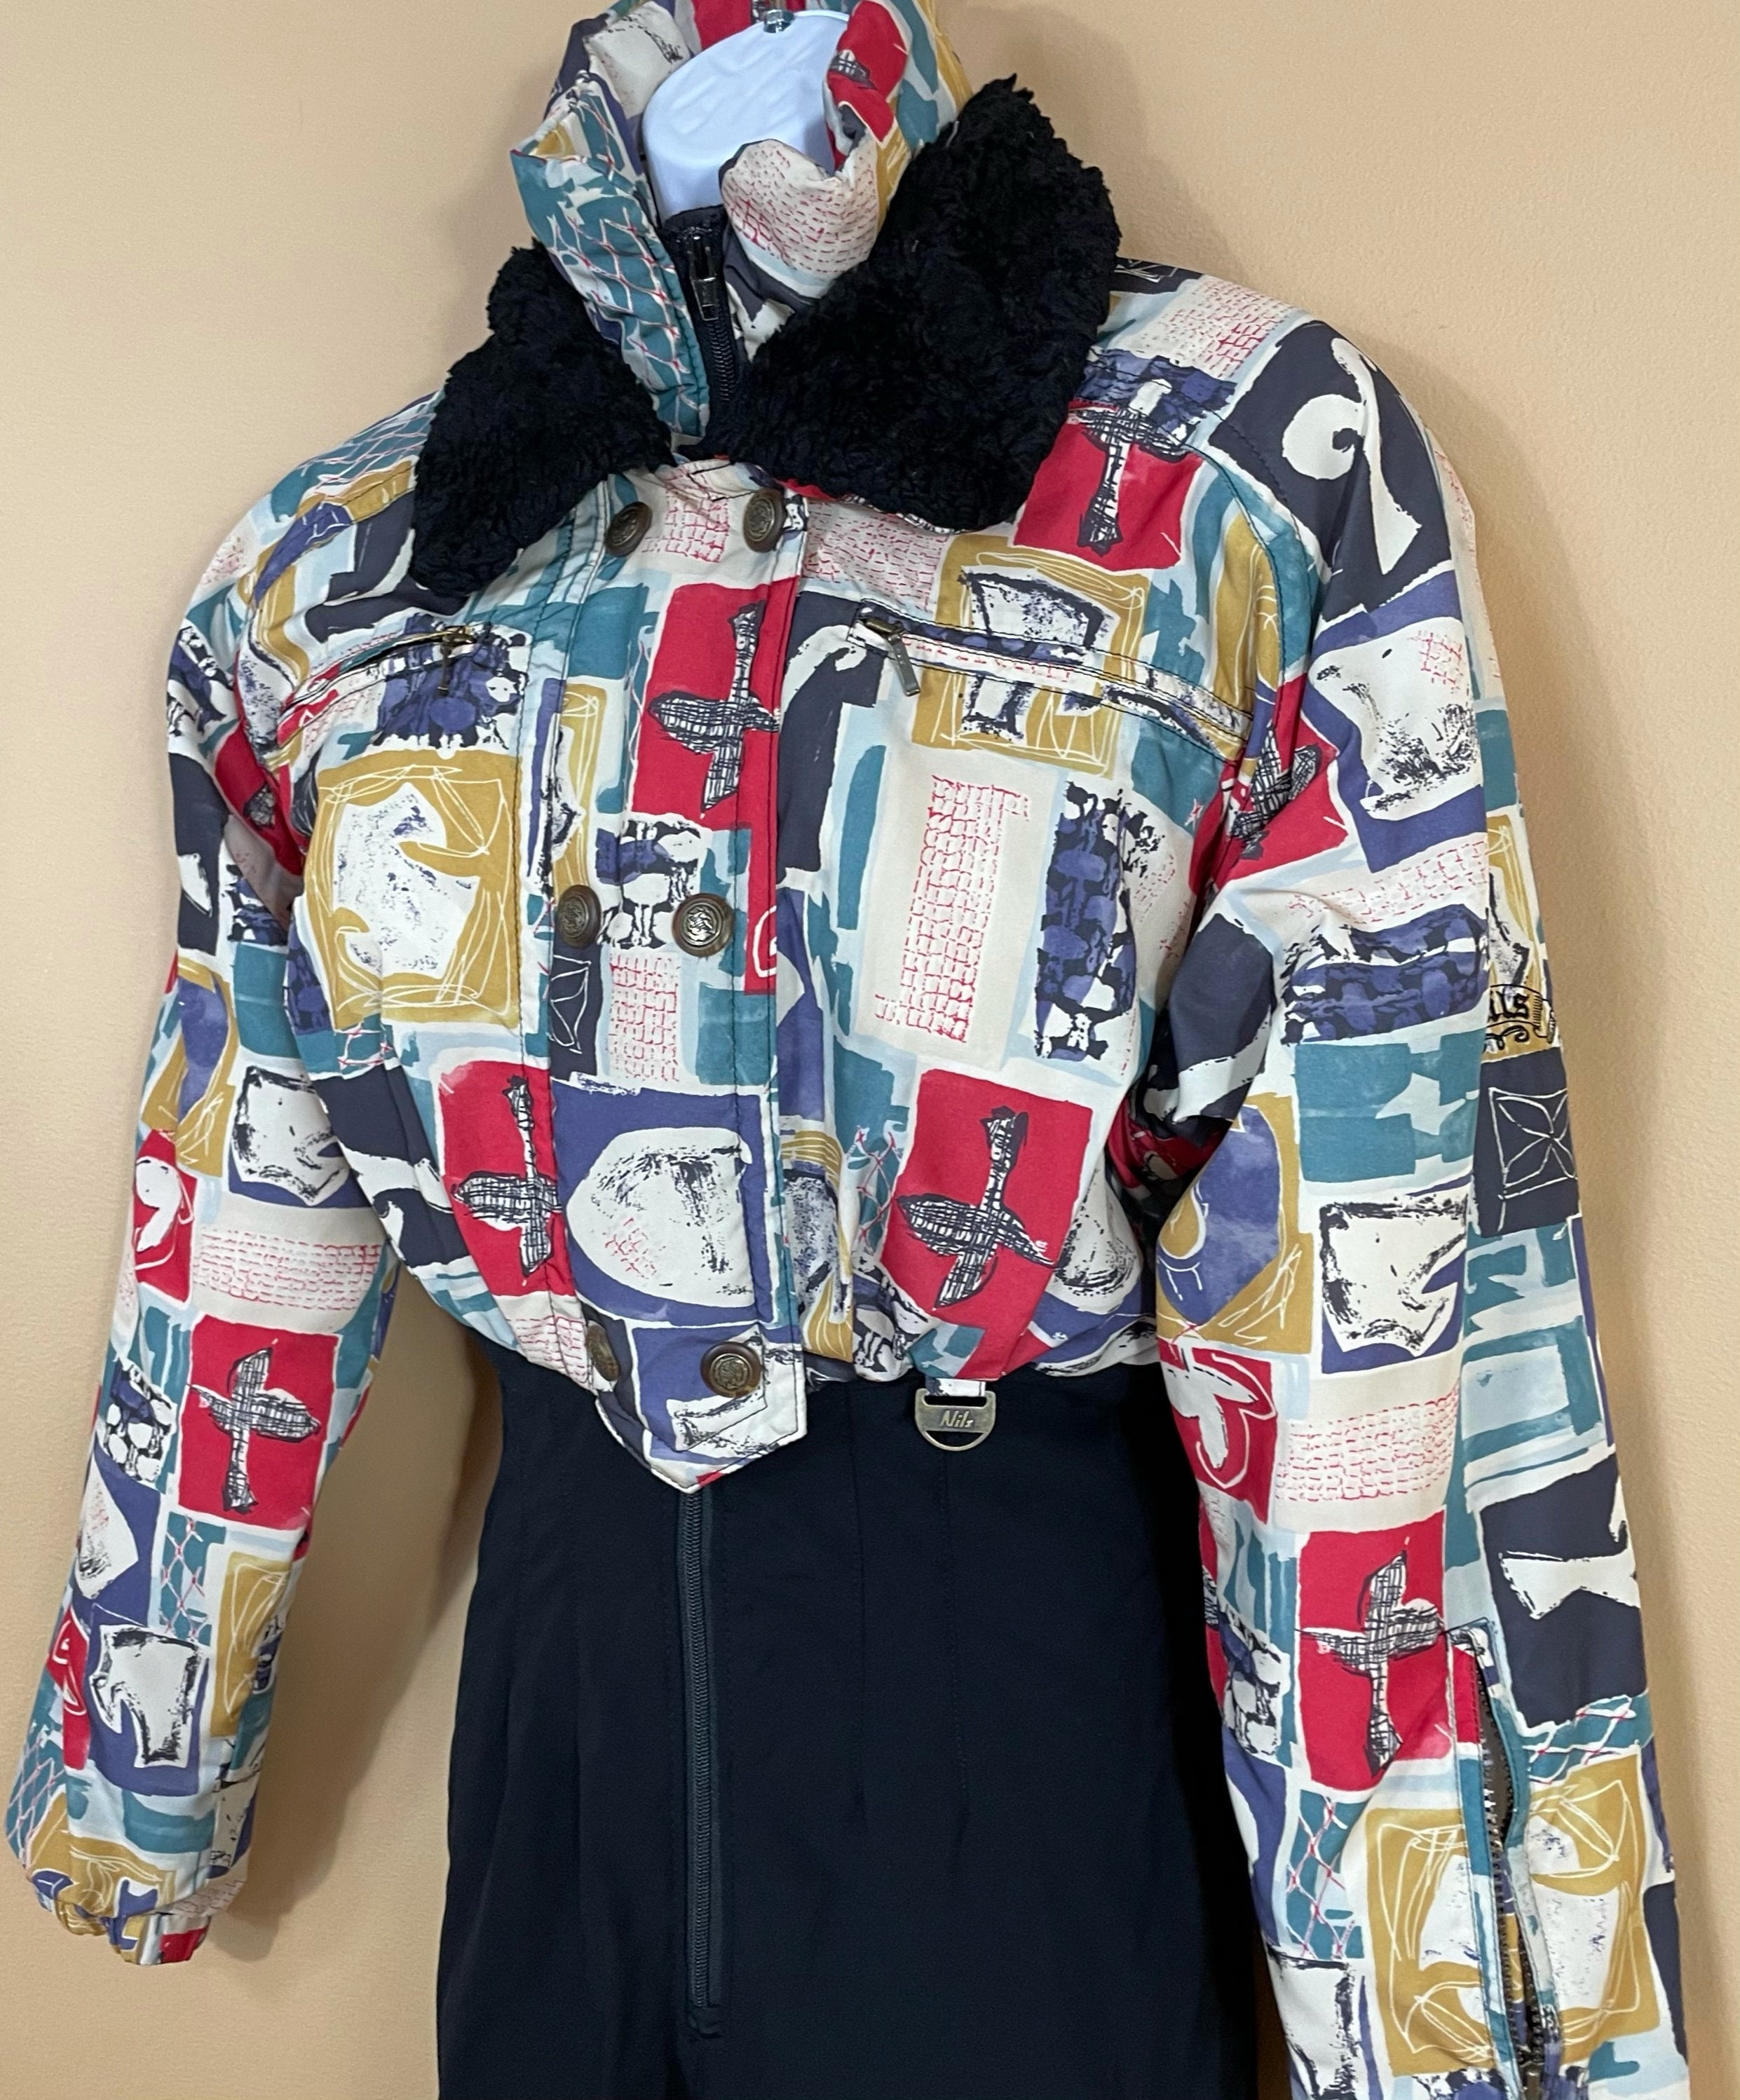 One Piece NILS Womens Vintage Retro 80s 90s Ski Snowboard Snow Bib Suit  Size 10 - $131 - From Danielle